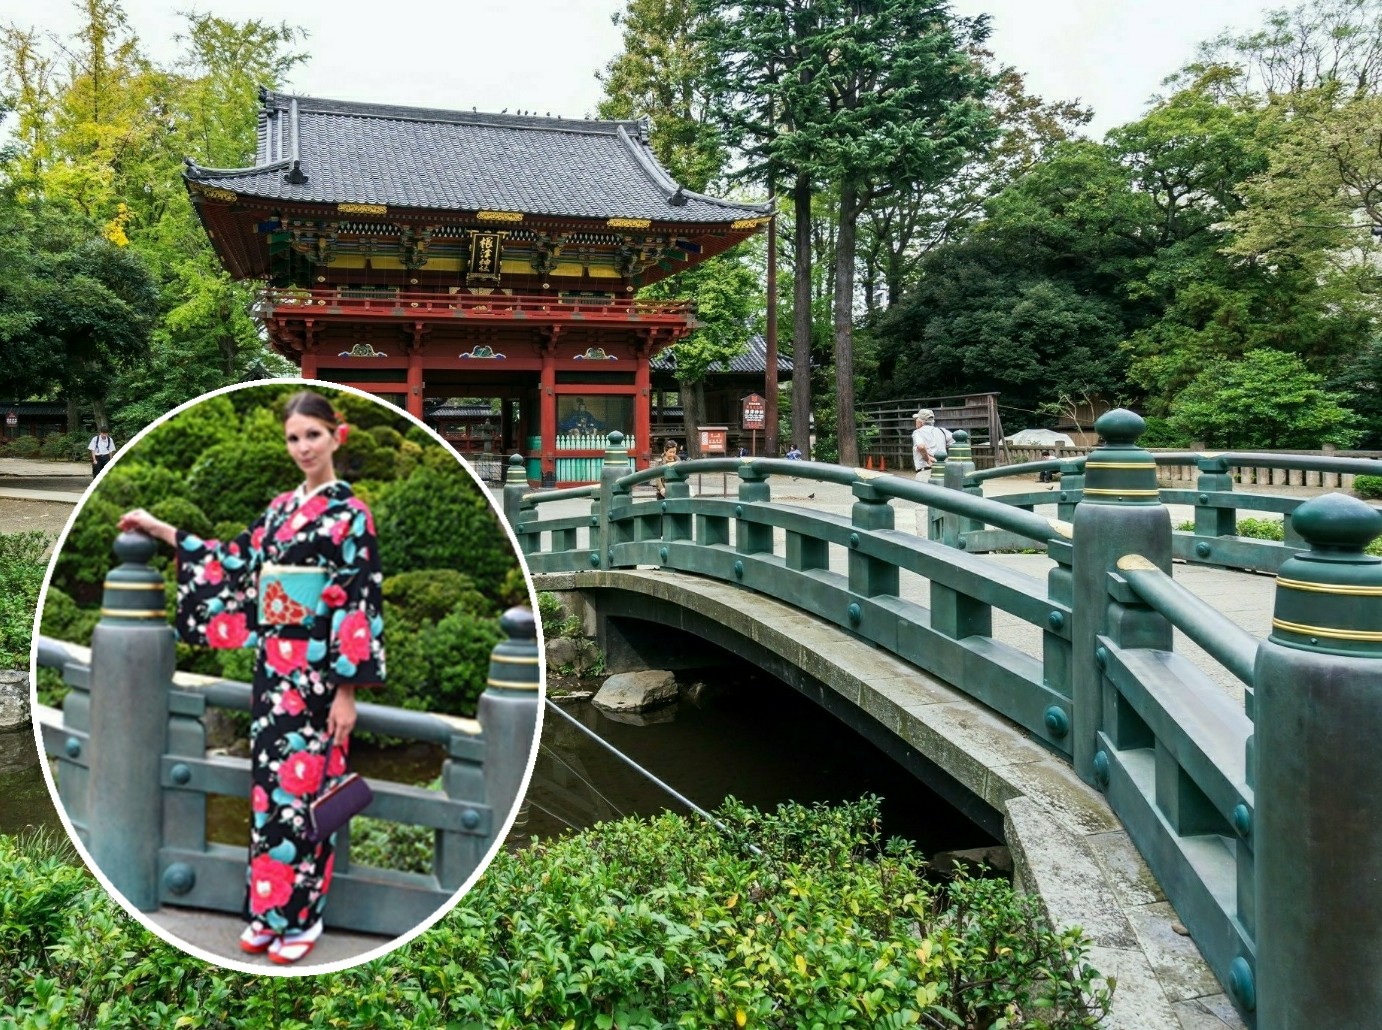 Kimono experience(option)[Available all year round], Visiting Nezu Shrine in a Kimono.